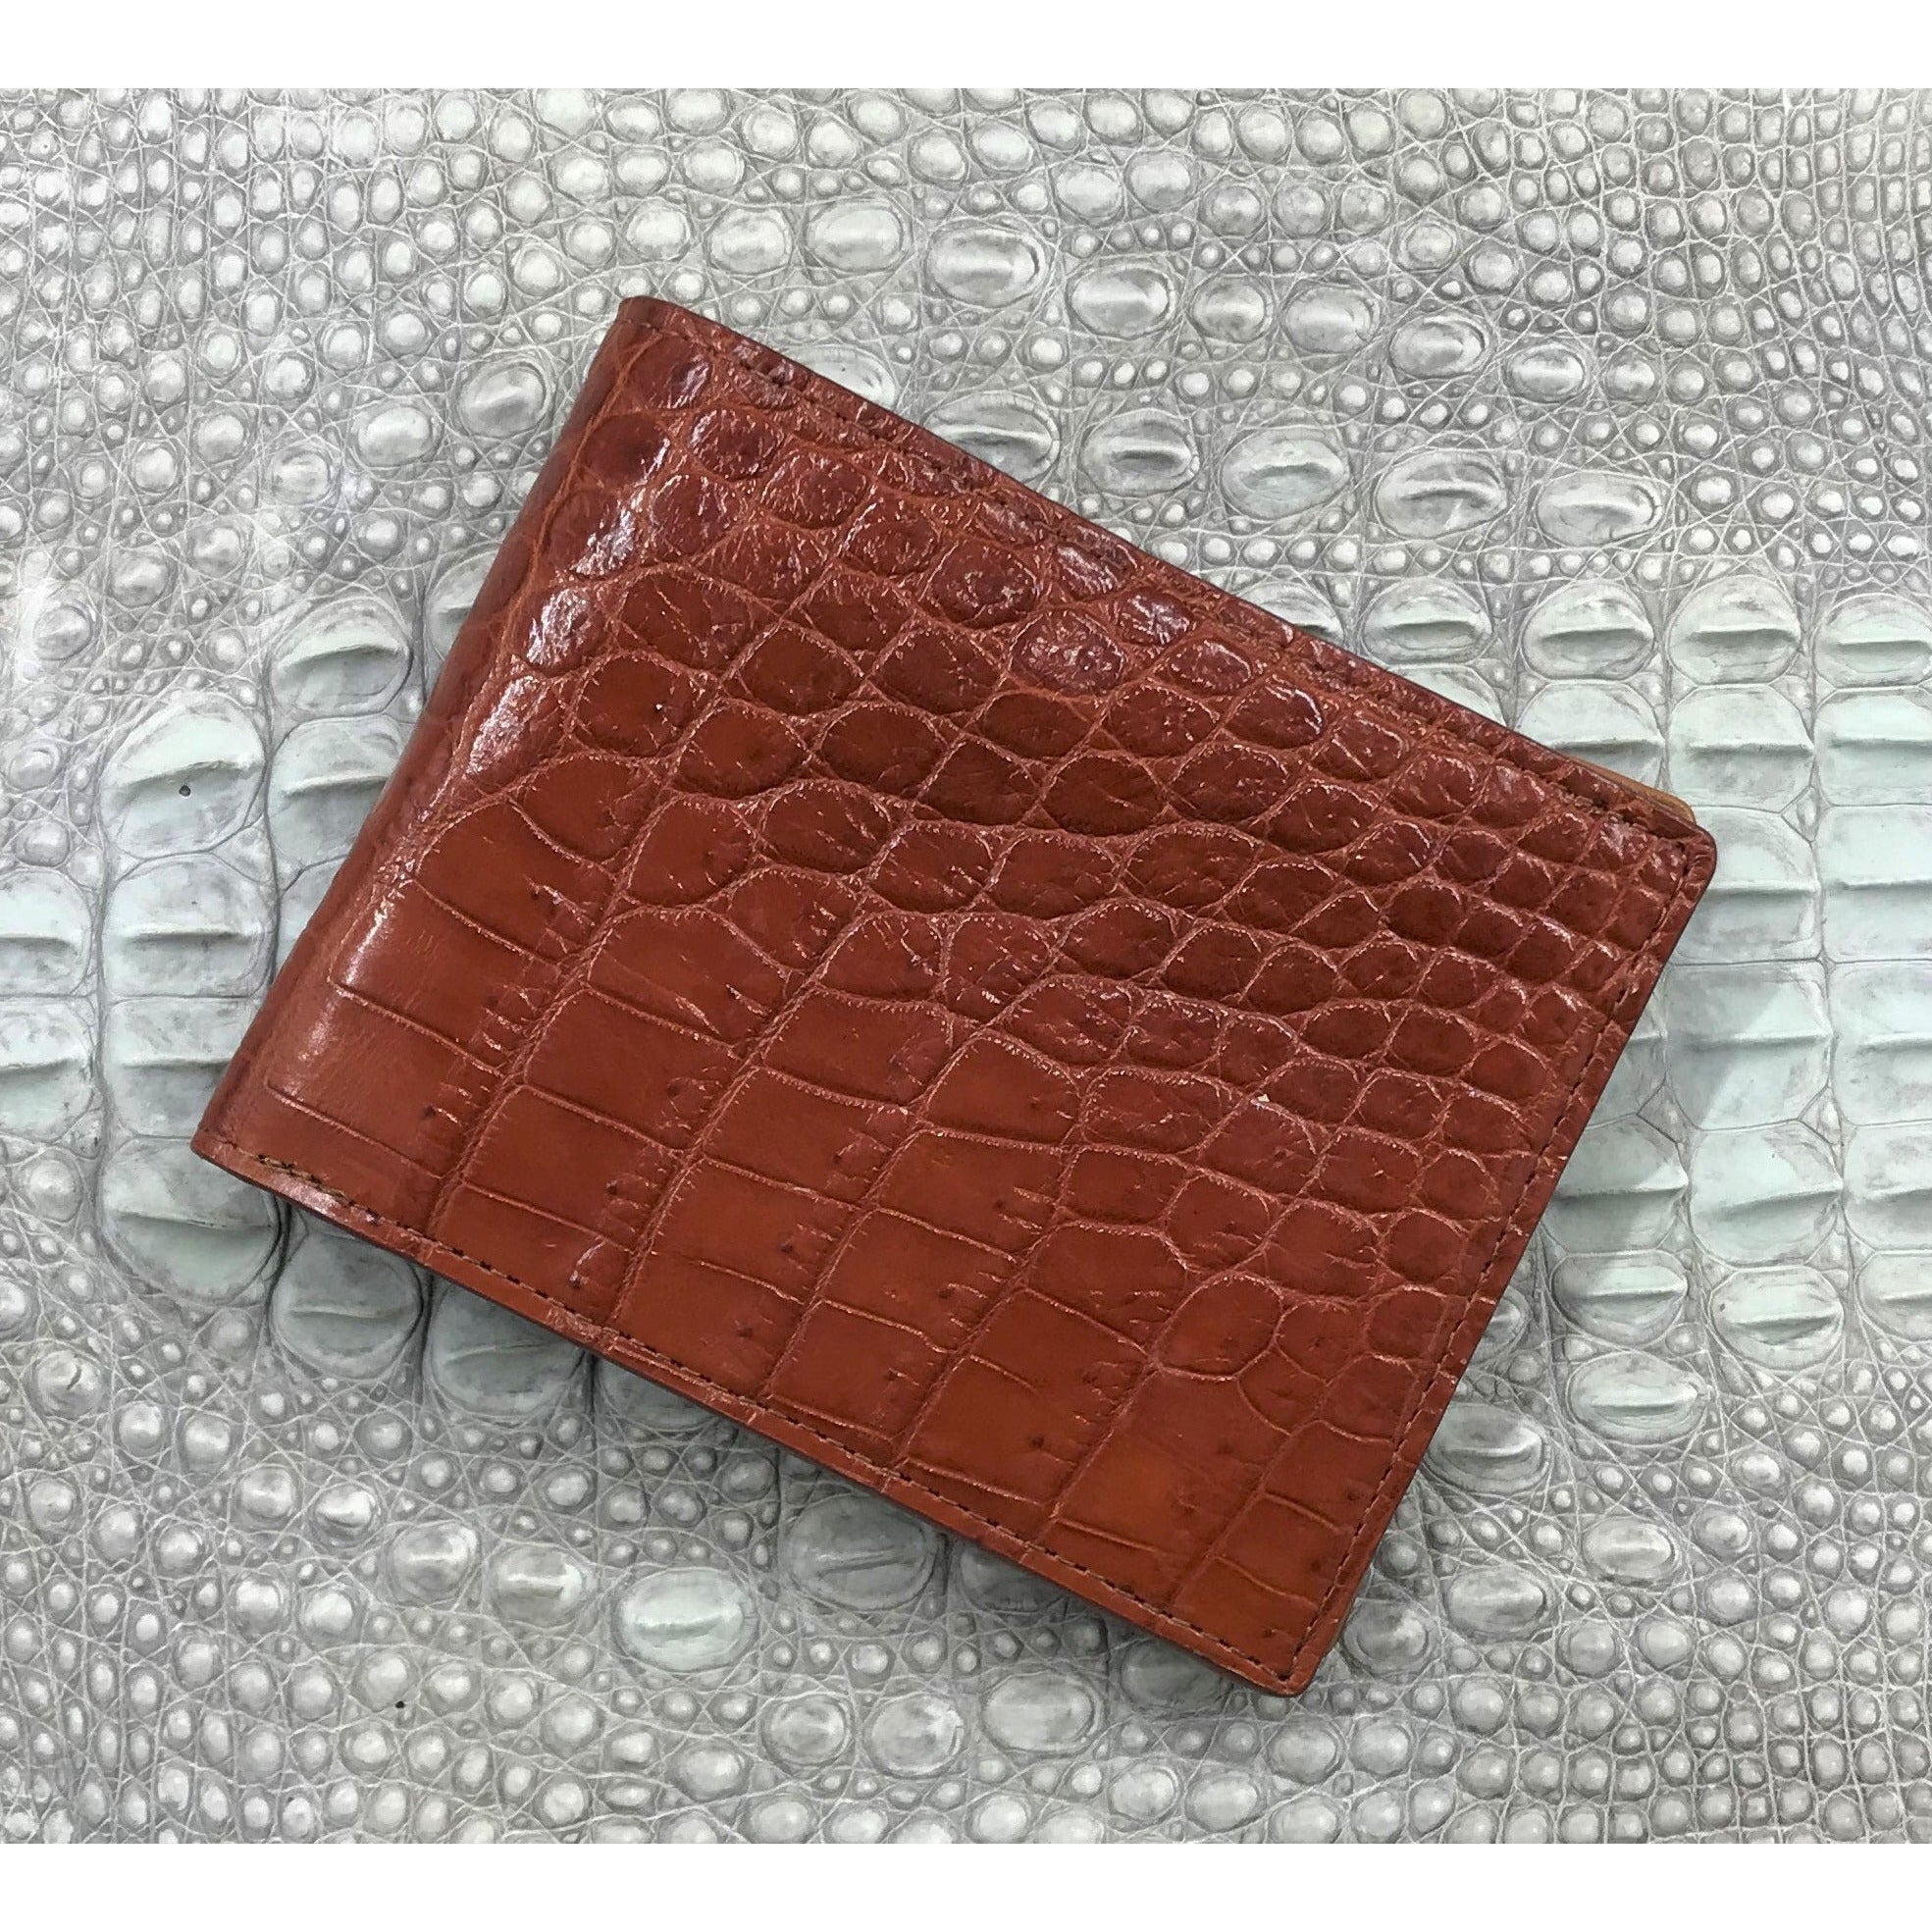 Brown Alligator Skin Bifold Wallet For Men | Handmade Crocodile Leather Wallet RFID Blocking | VL5546 - Vinacreations